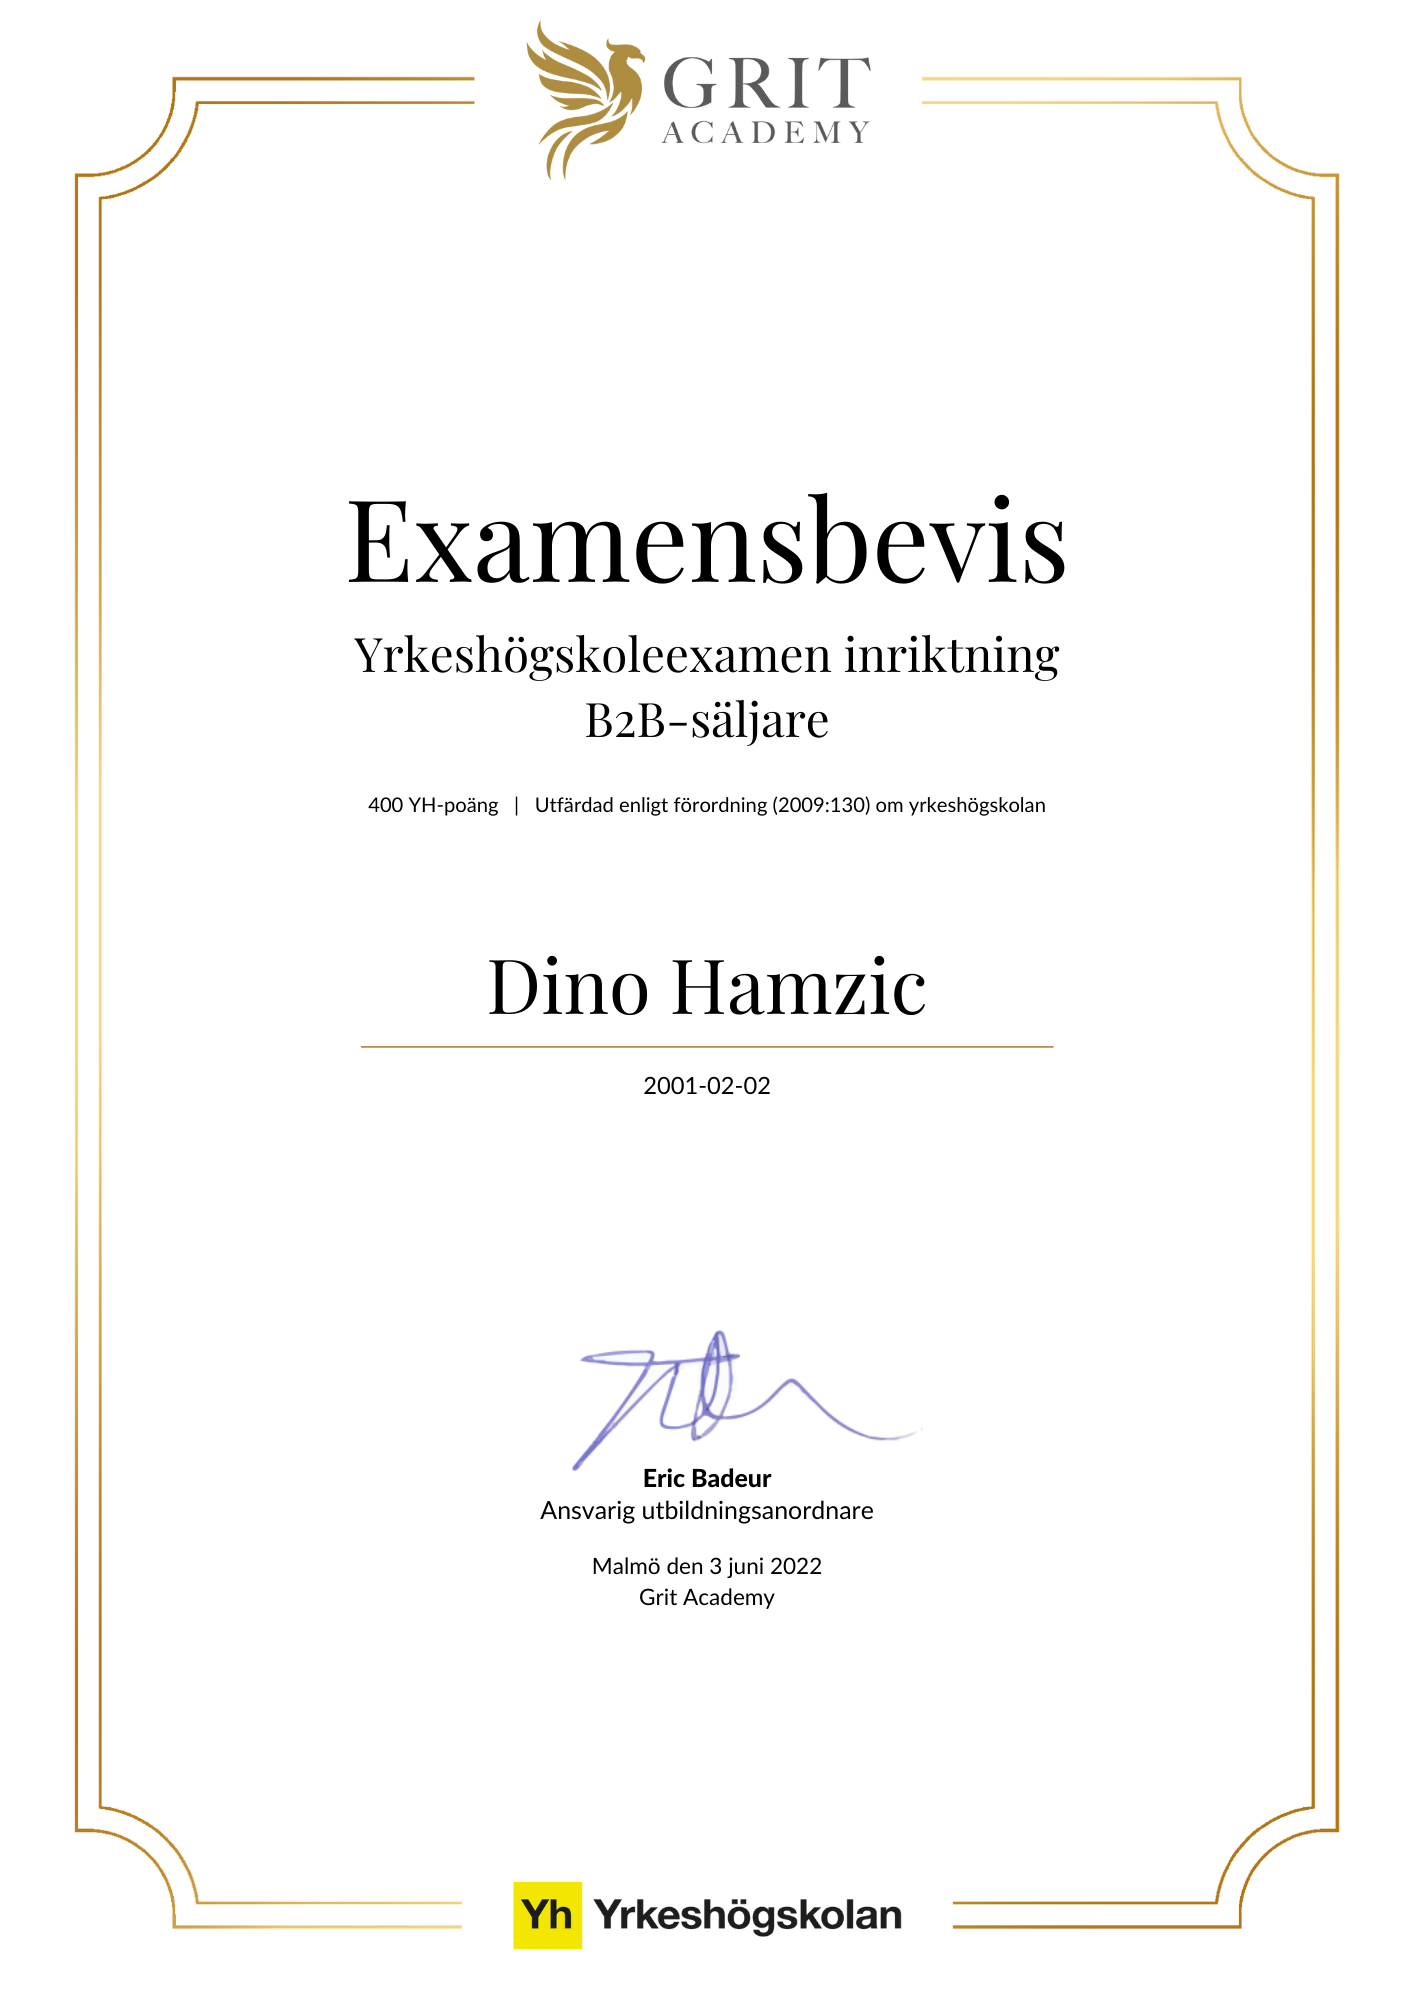 Examensbevis Dino Hamzic